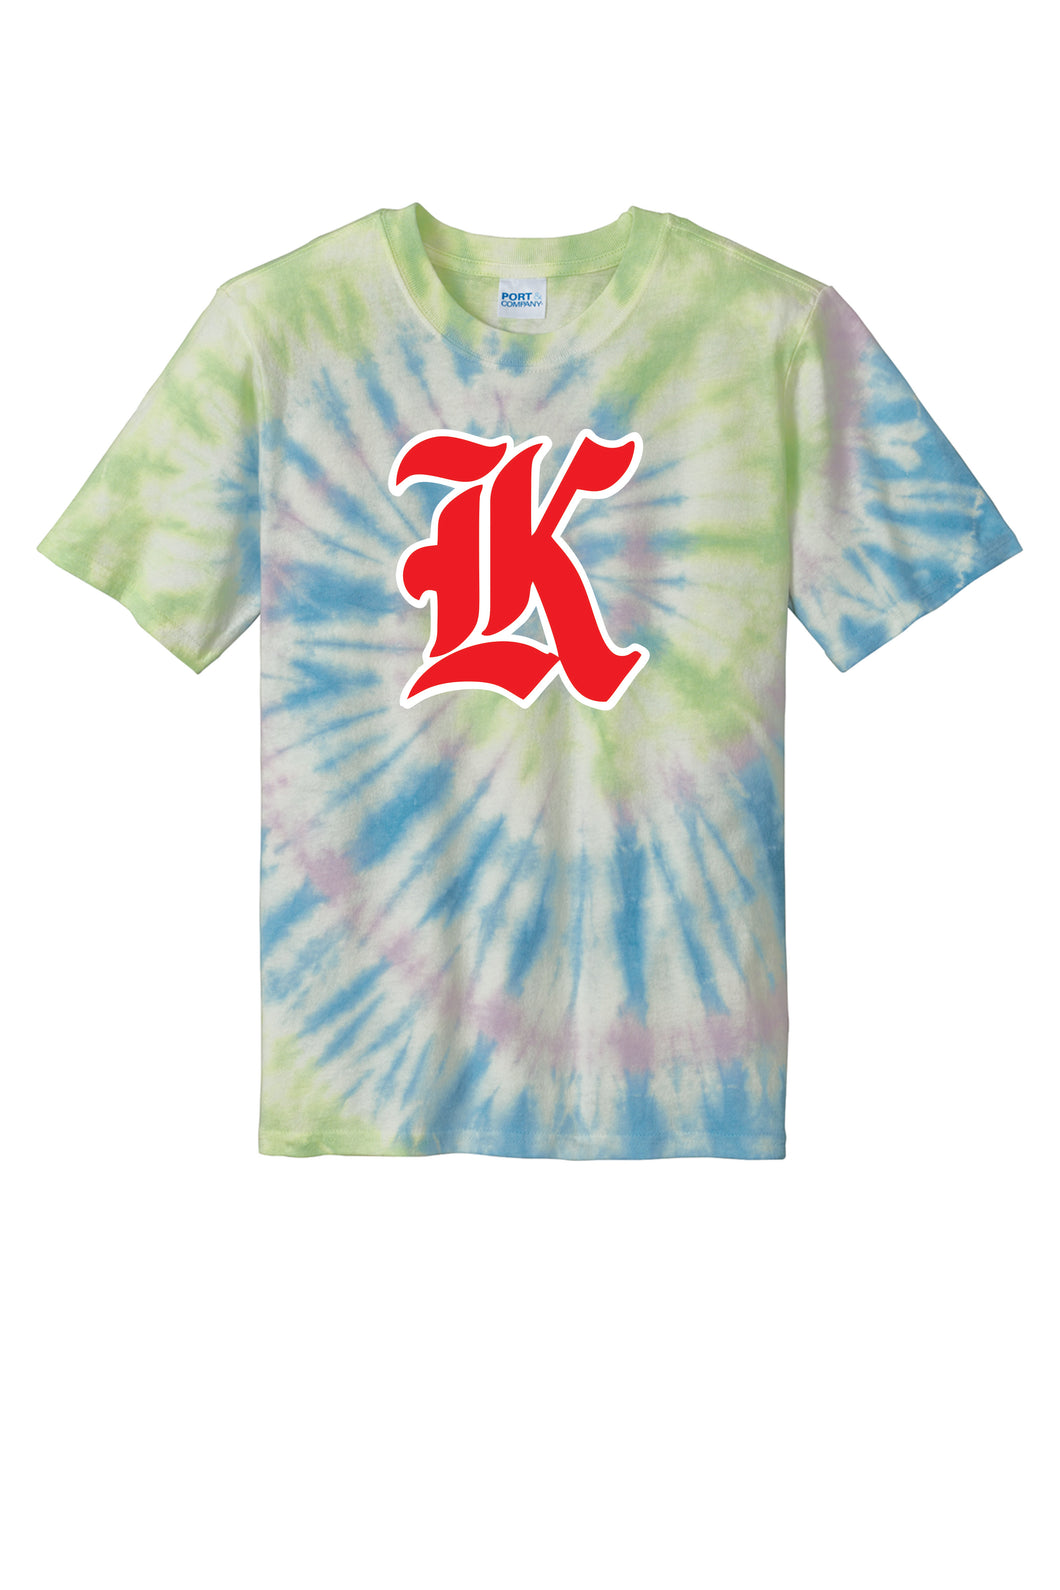 KIPP Intrepid School T-Shirt – Fine Custom Design